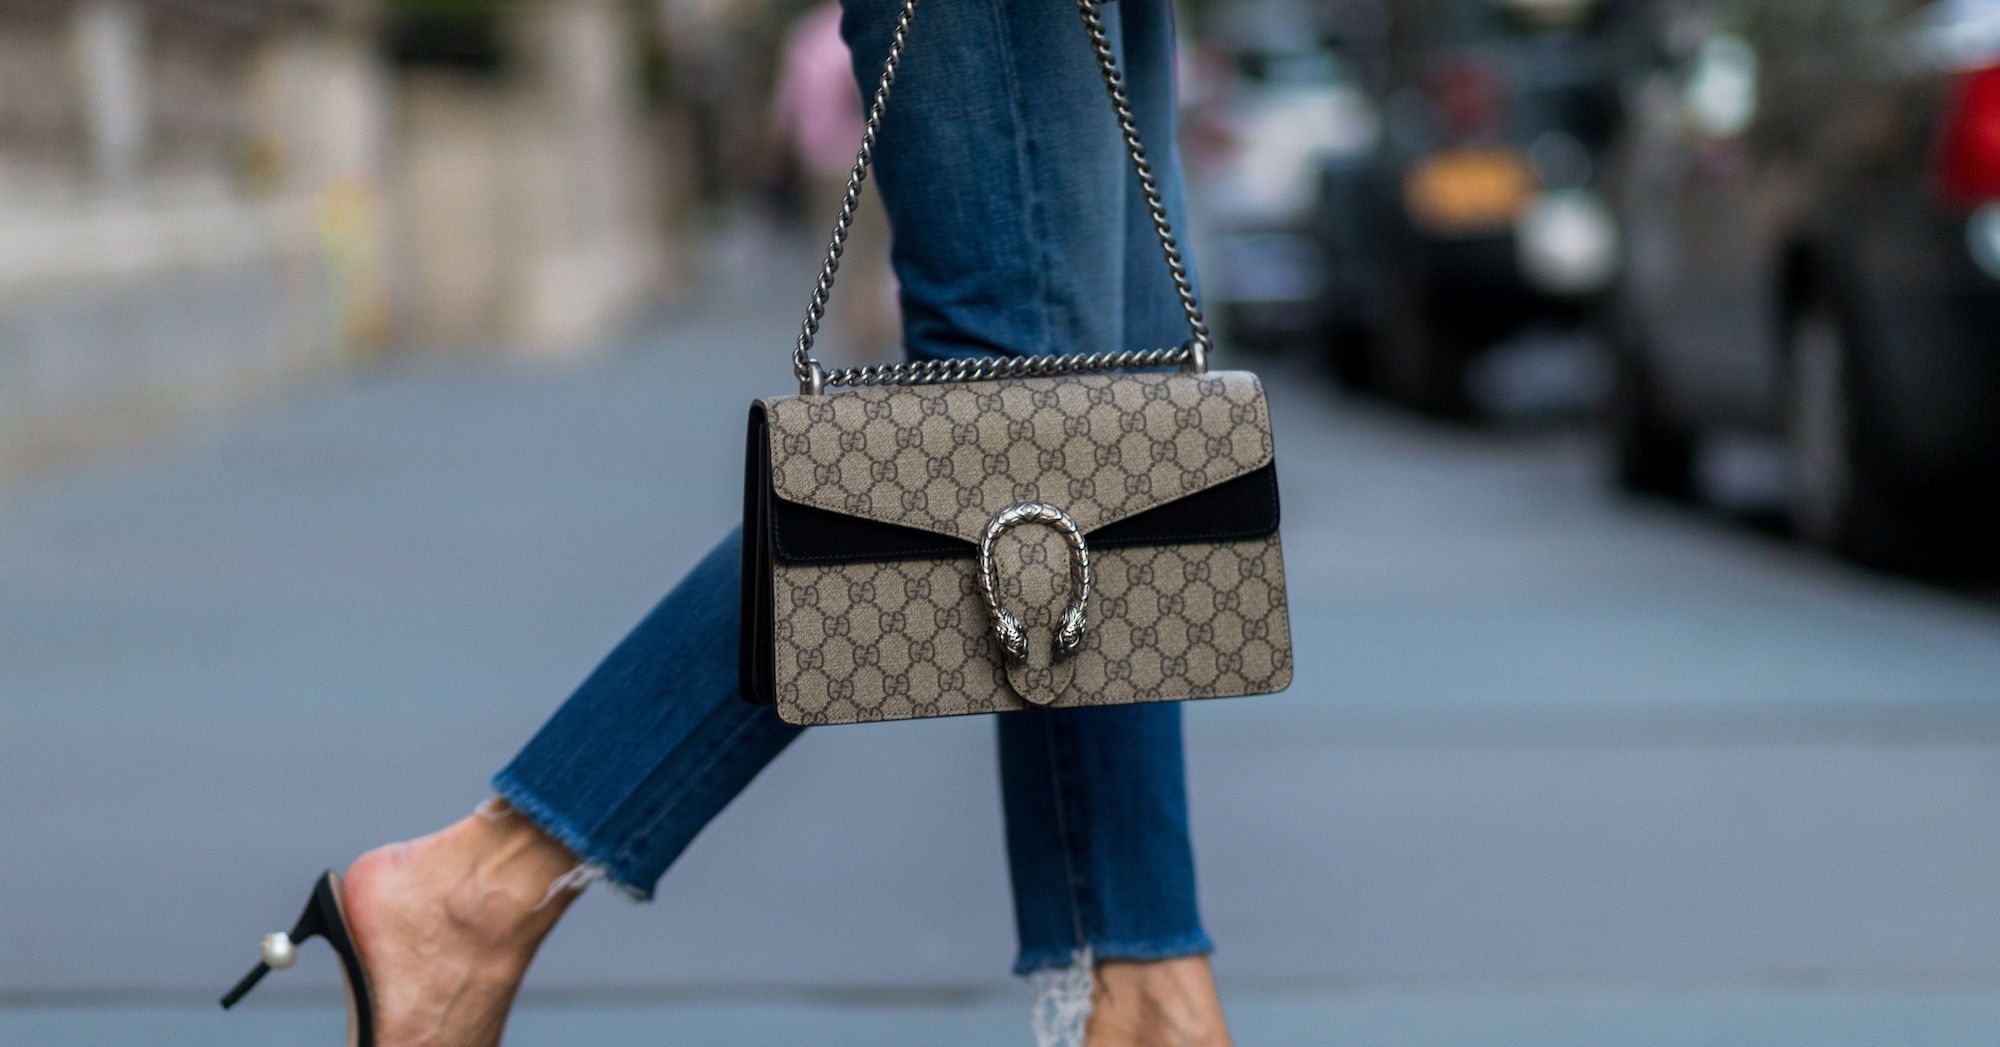 Sell Gucci Handbags - Get Cash Online